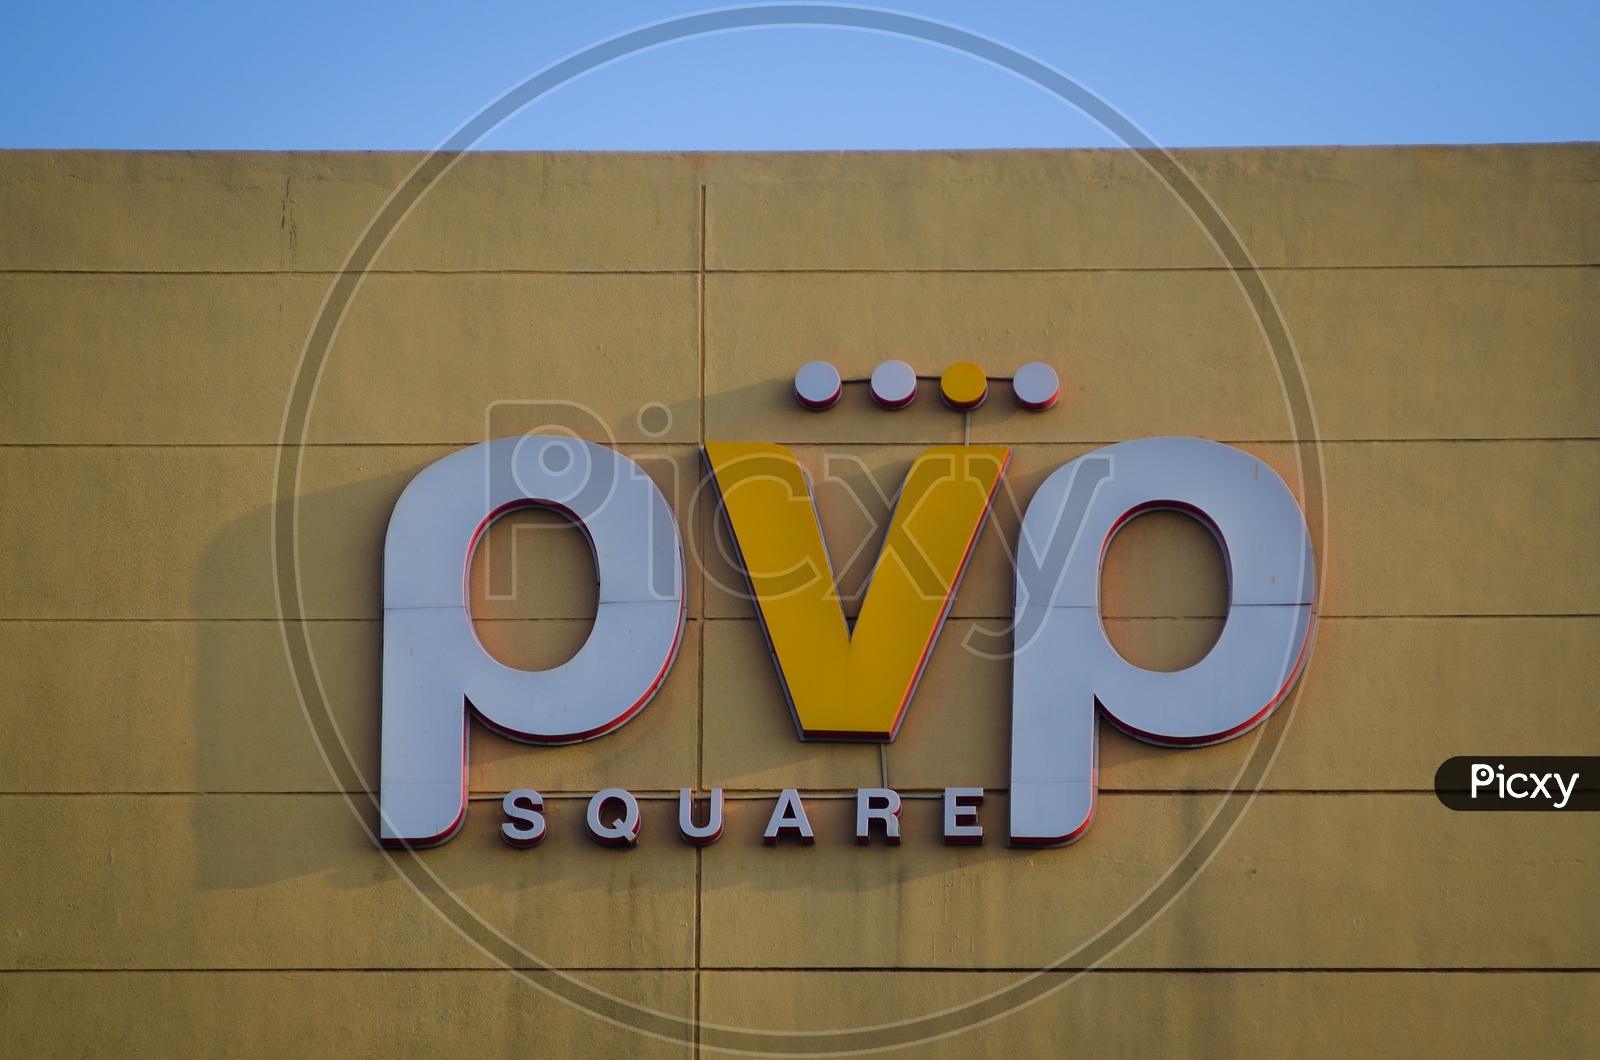 PVP square mall logo